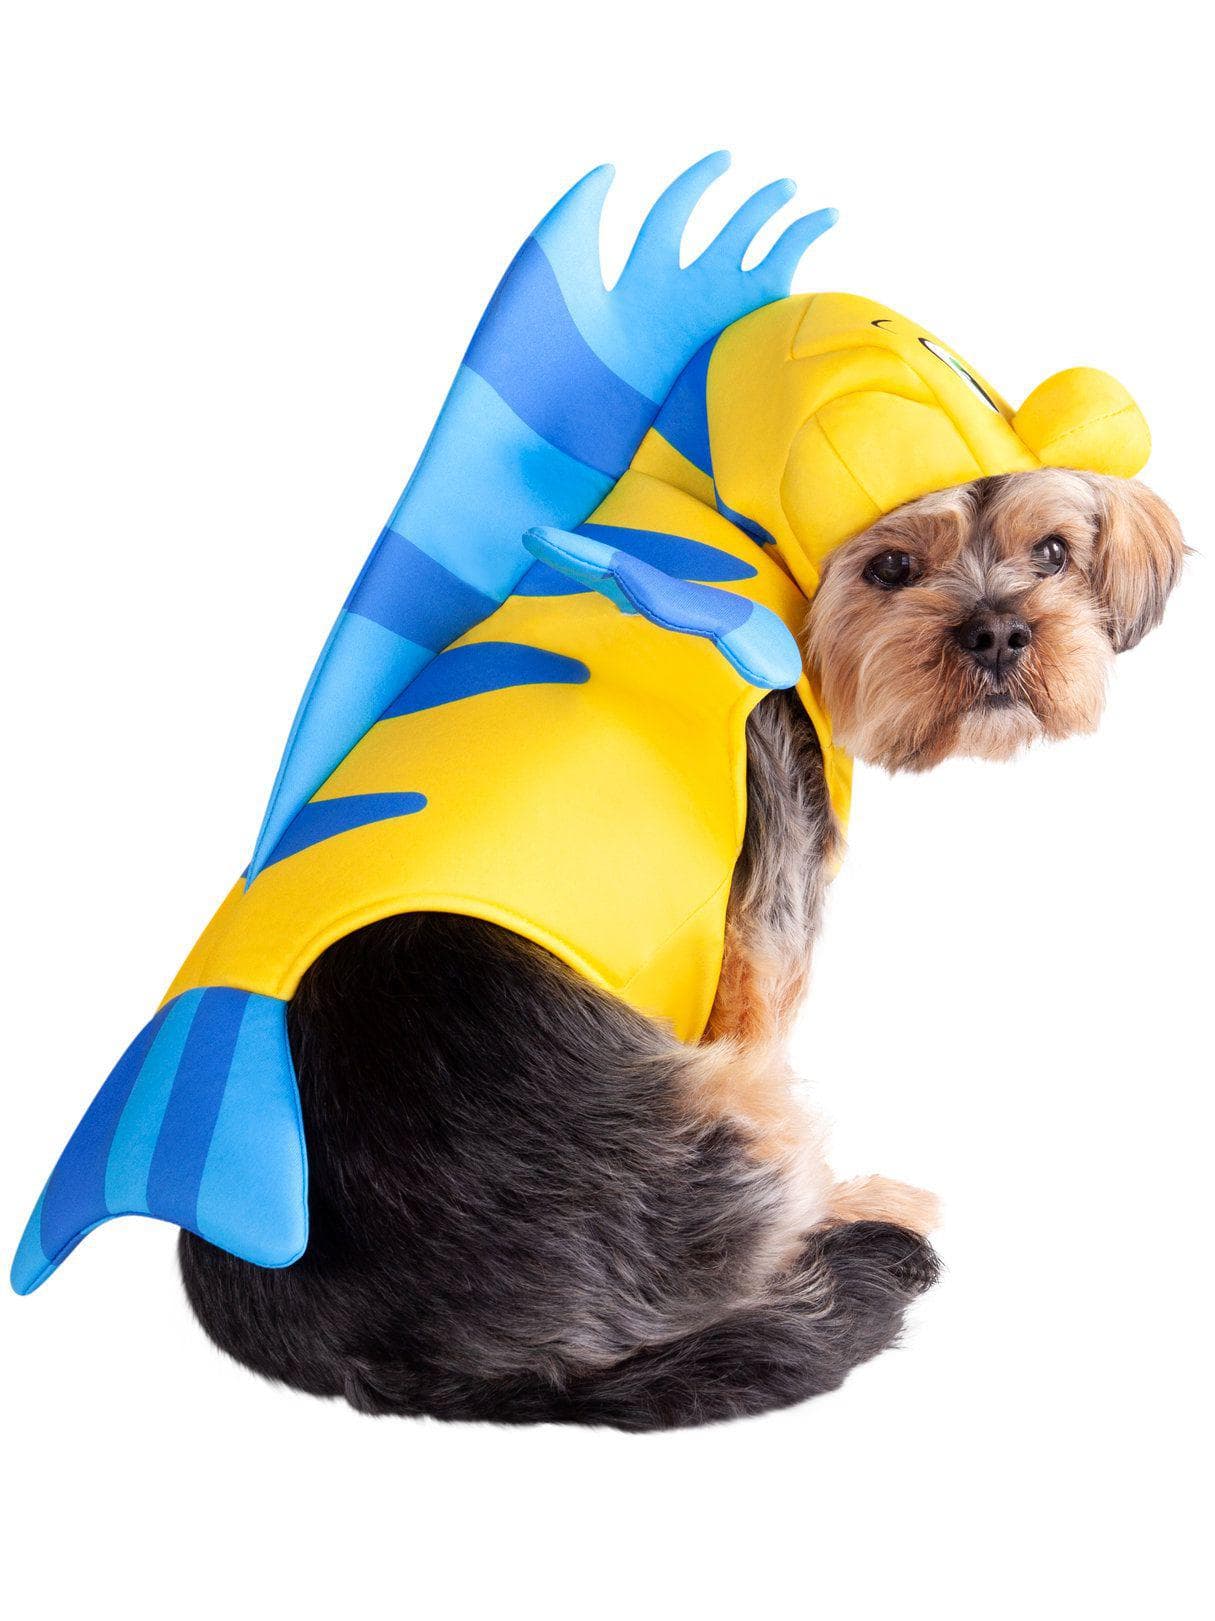 The Little Mermaid Flounder Pet Costume - costumes.com